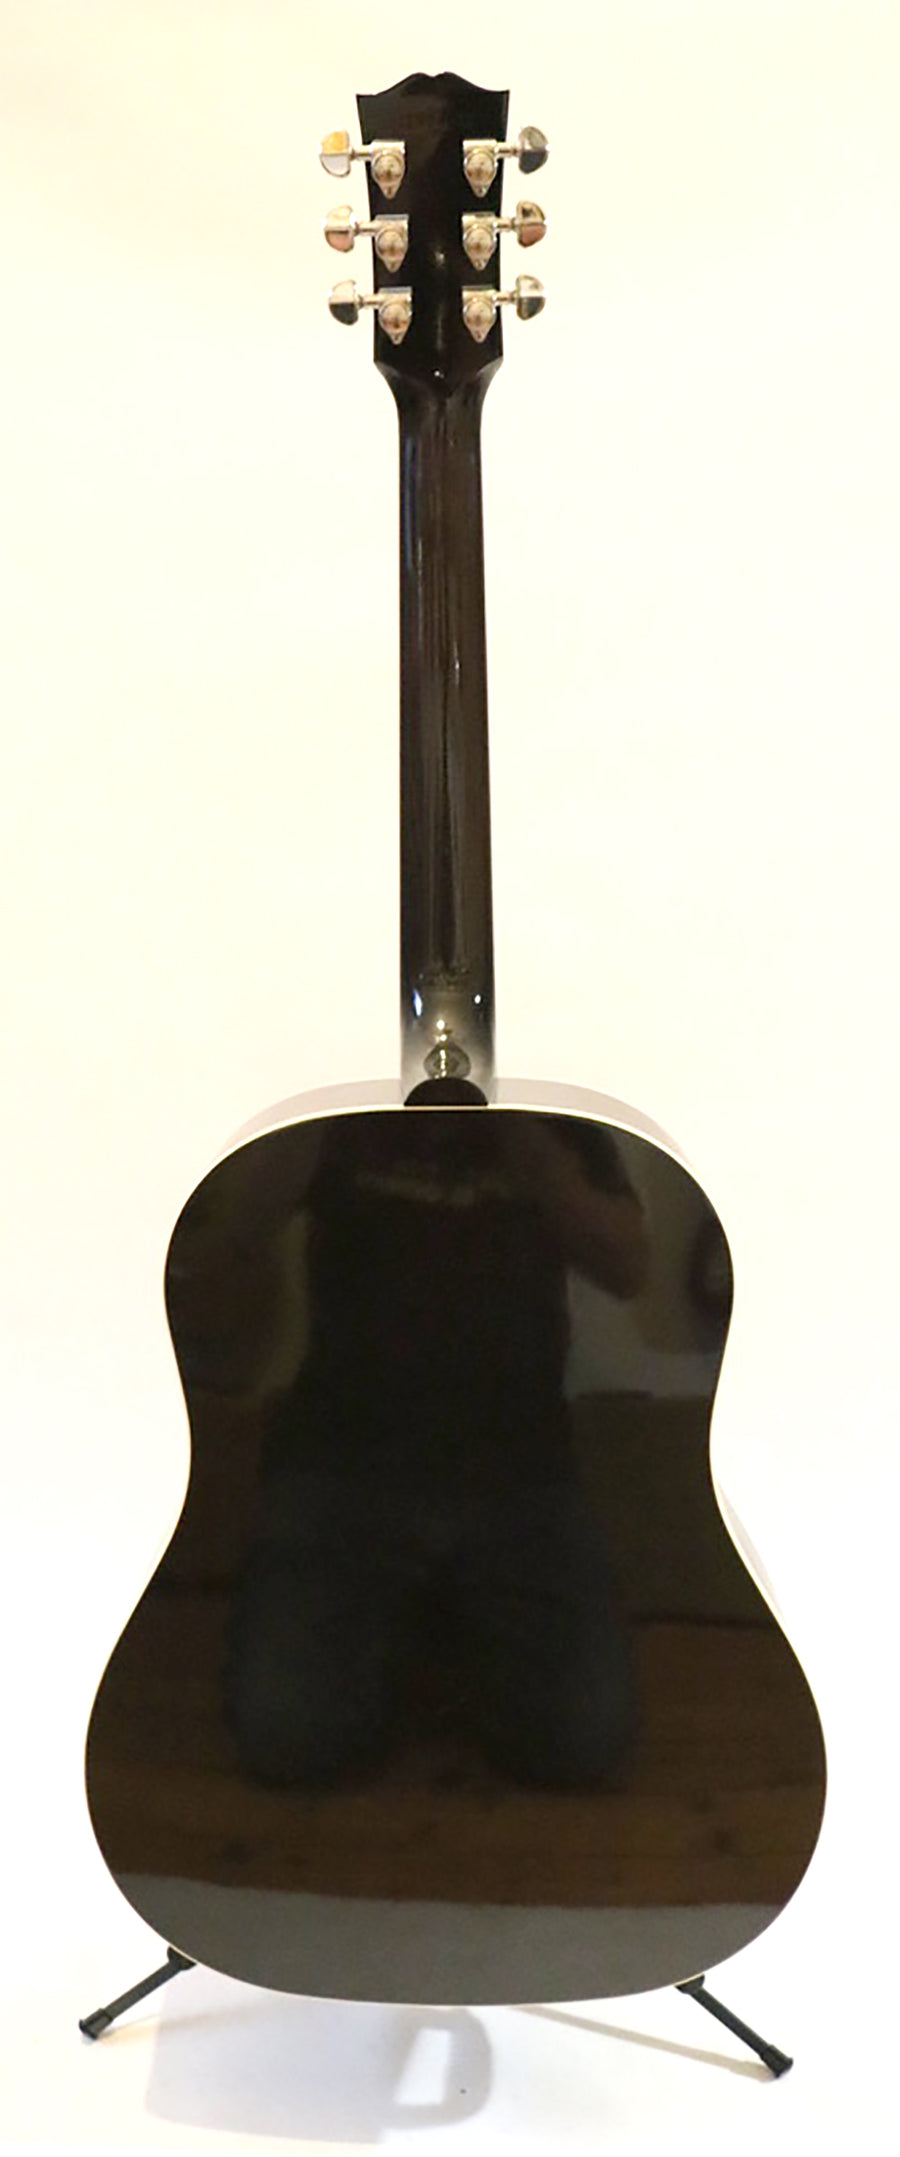 Gibson J45 2014